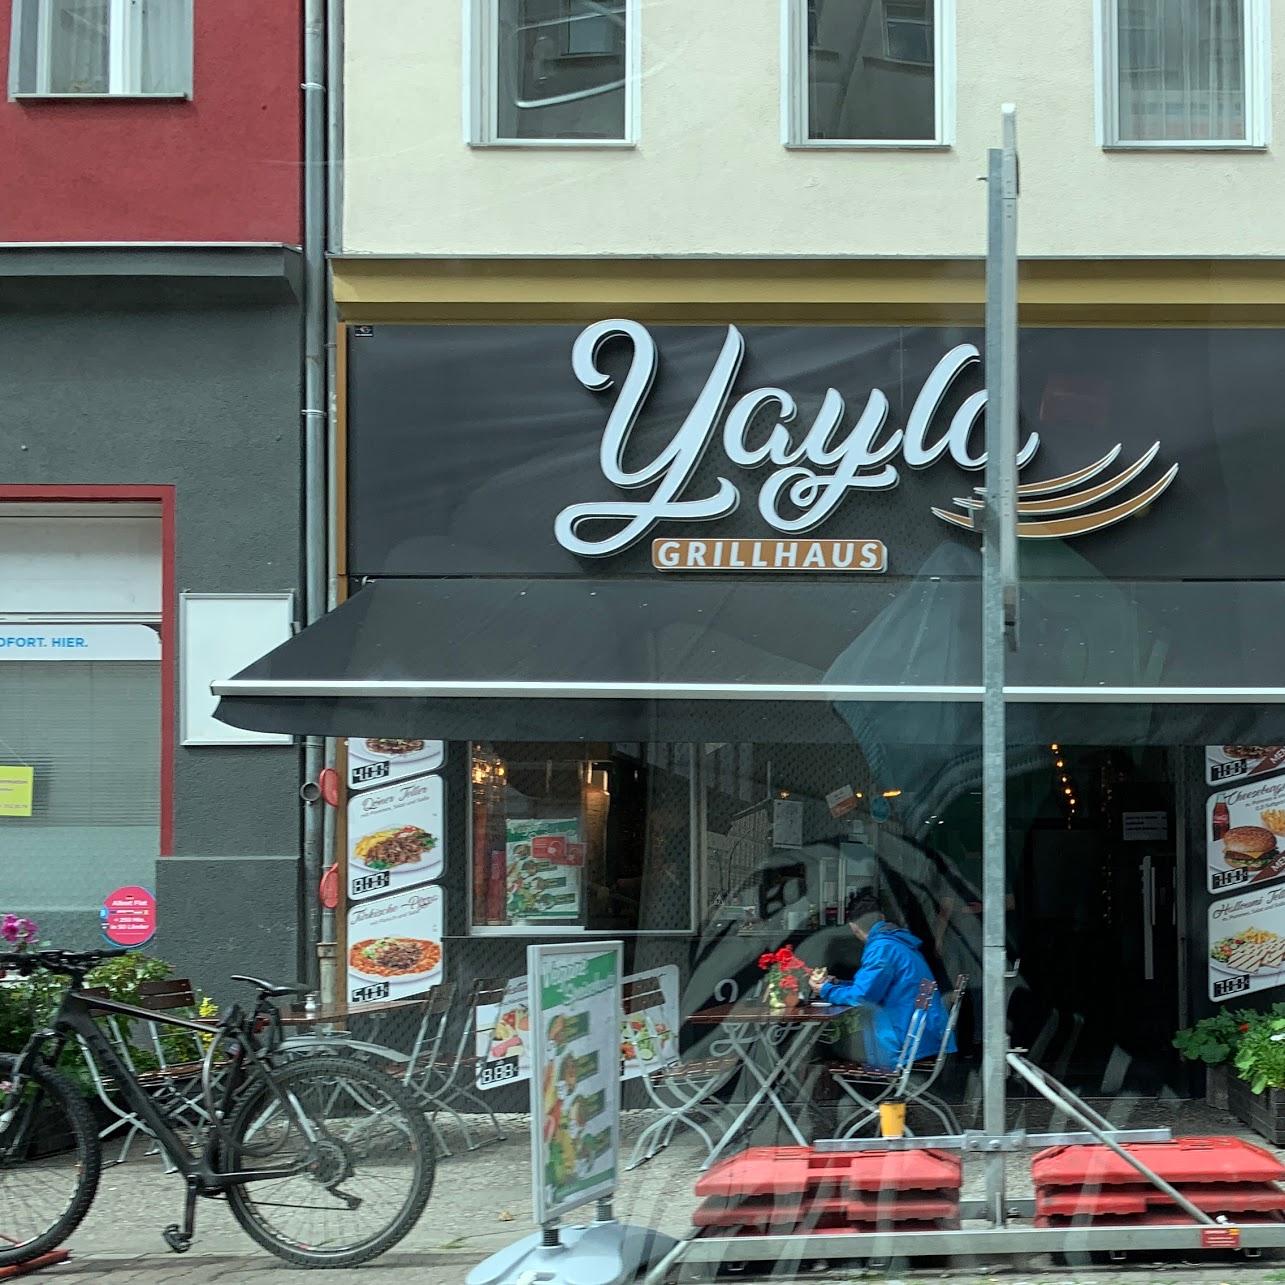 Restaurant "Yayla Grillhaus" in Berlin